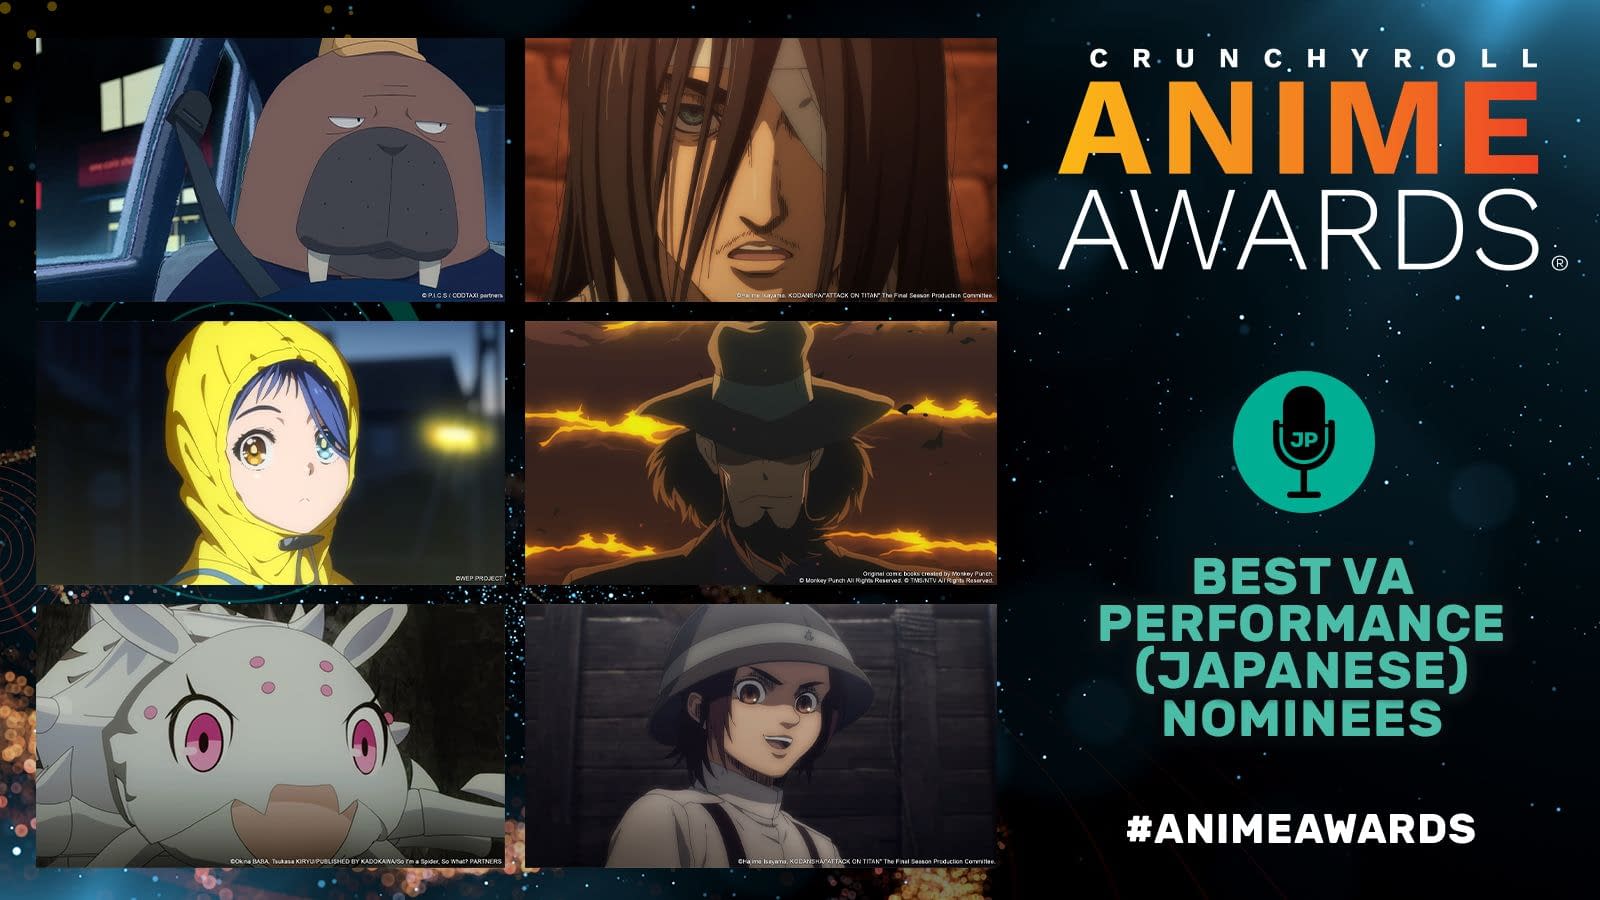 Suzume, Chainsaw Man Anime Nominated for Saturn Awards - Crunchyroll News